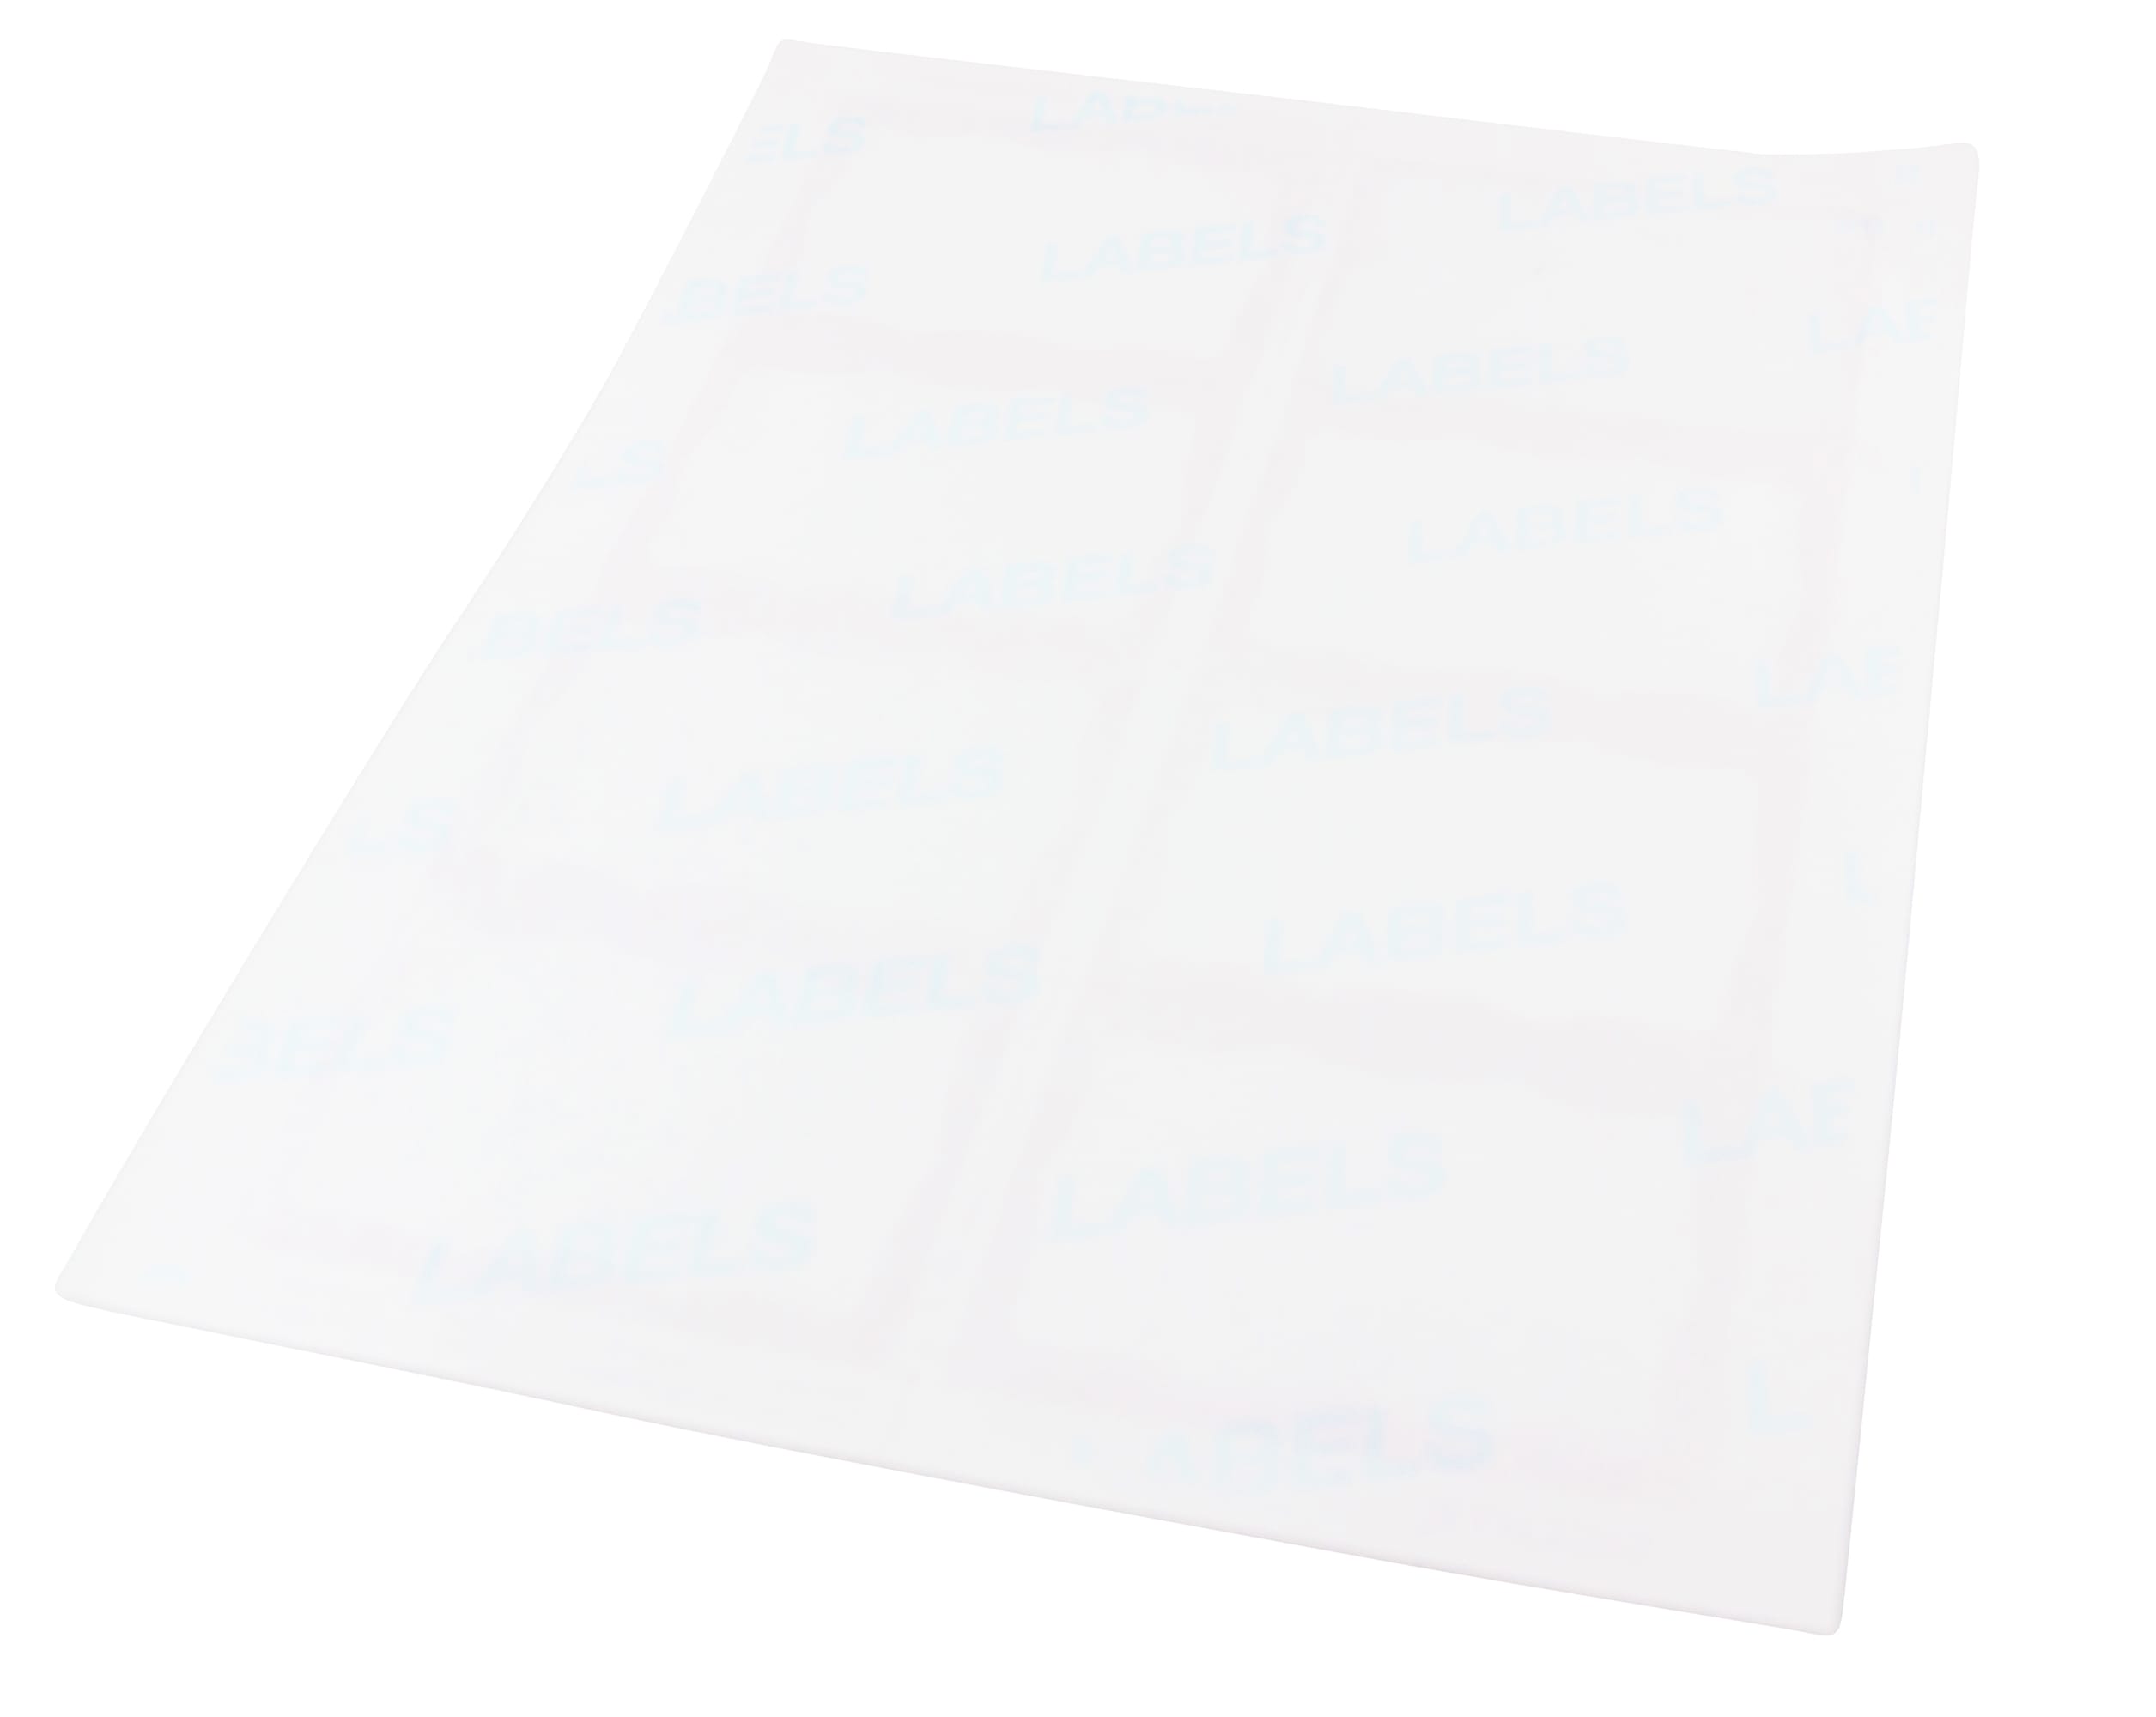 SICURIX BLUE Border Adhesive Badges 8 Per Sheet 200 Pack WHITE (67653)